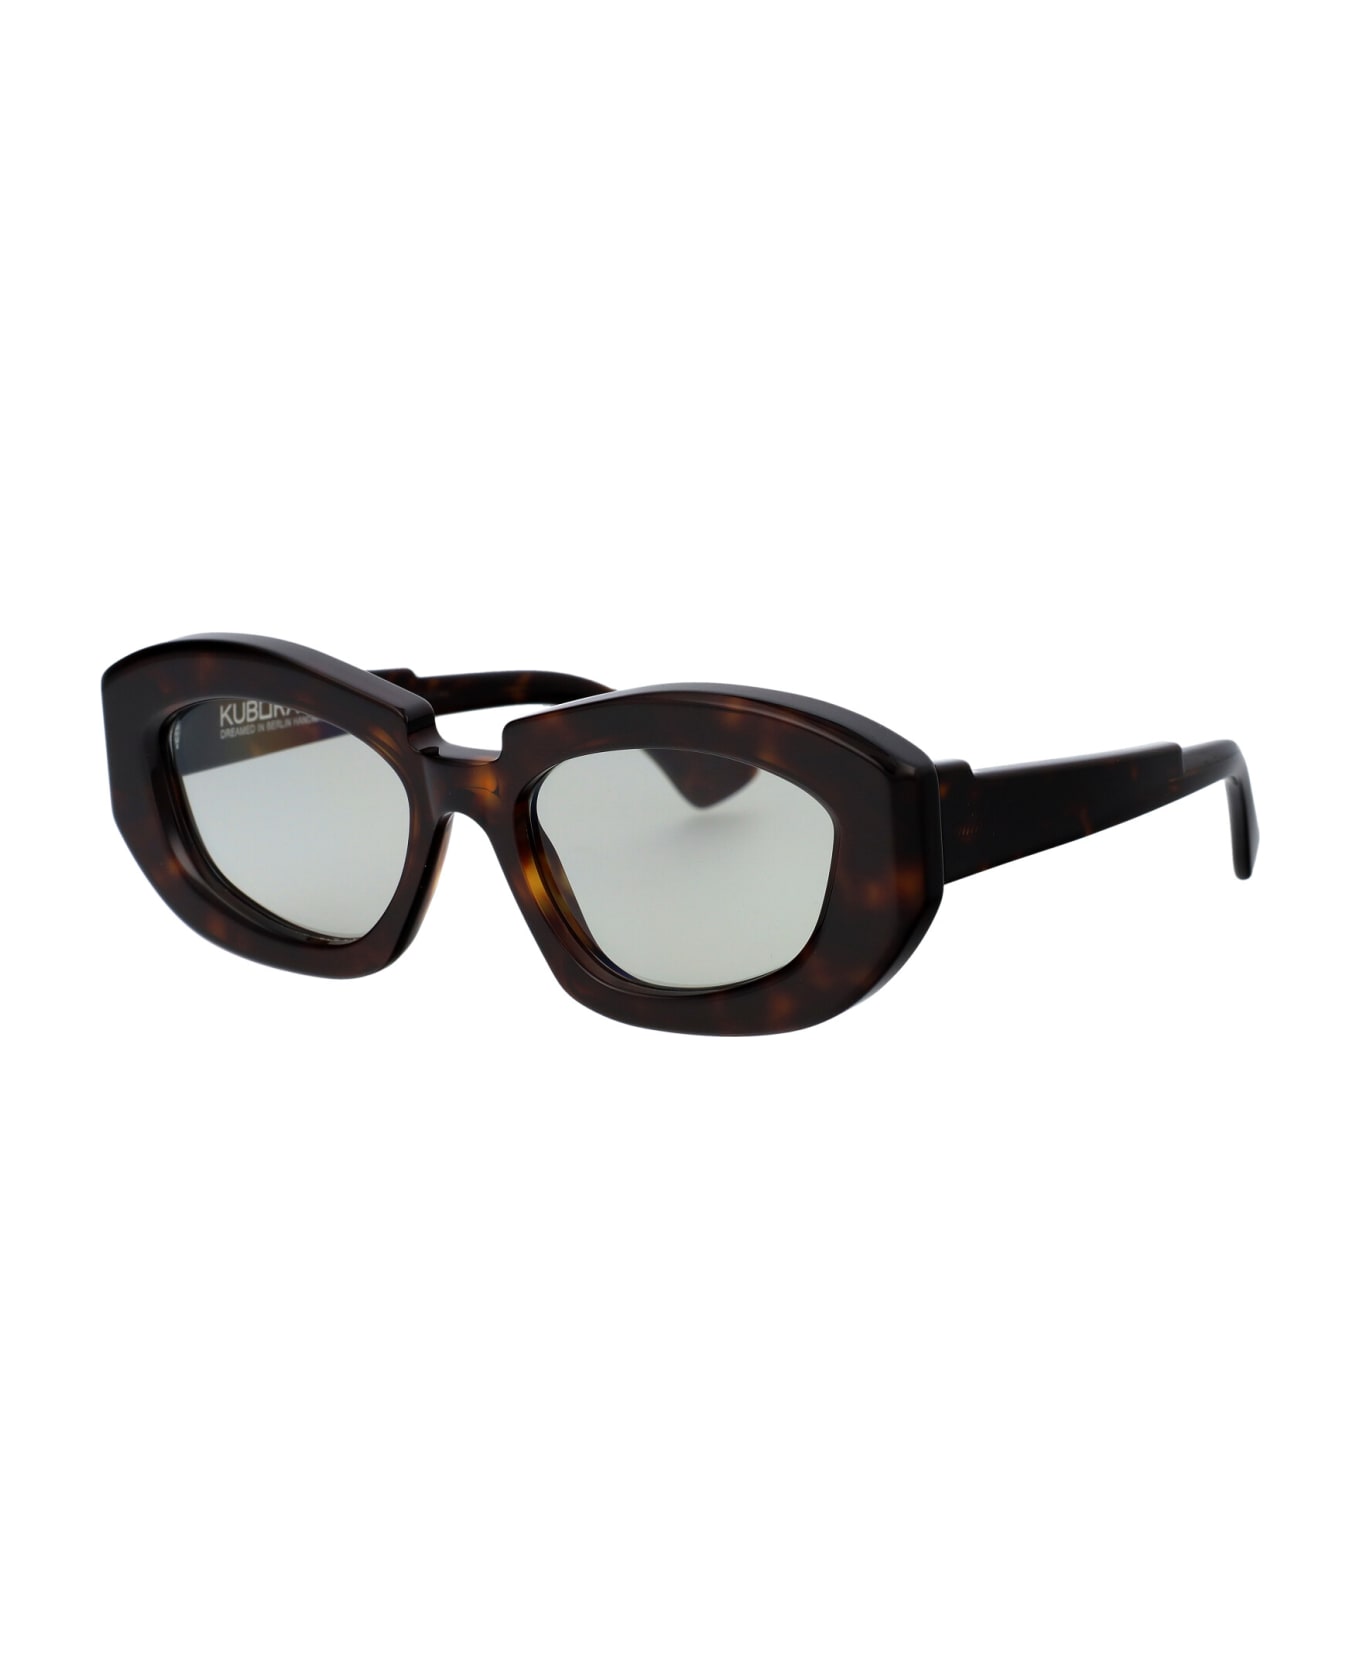 Kuboraum Maske X23 Sunglasses - TS grey1*